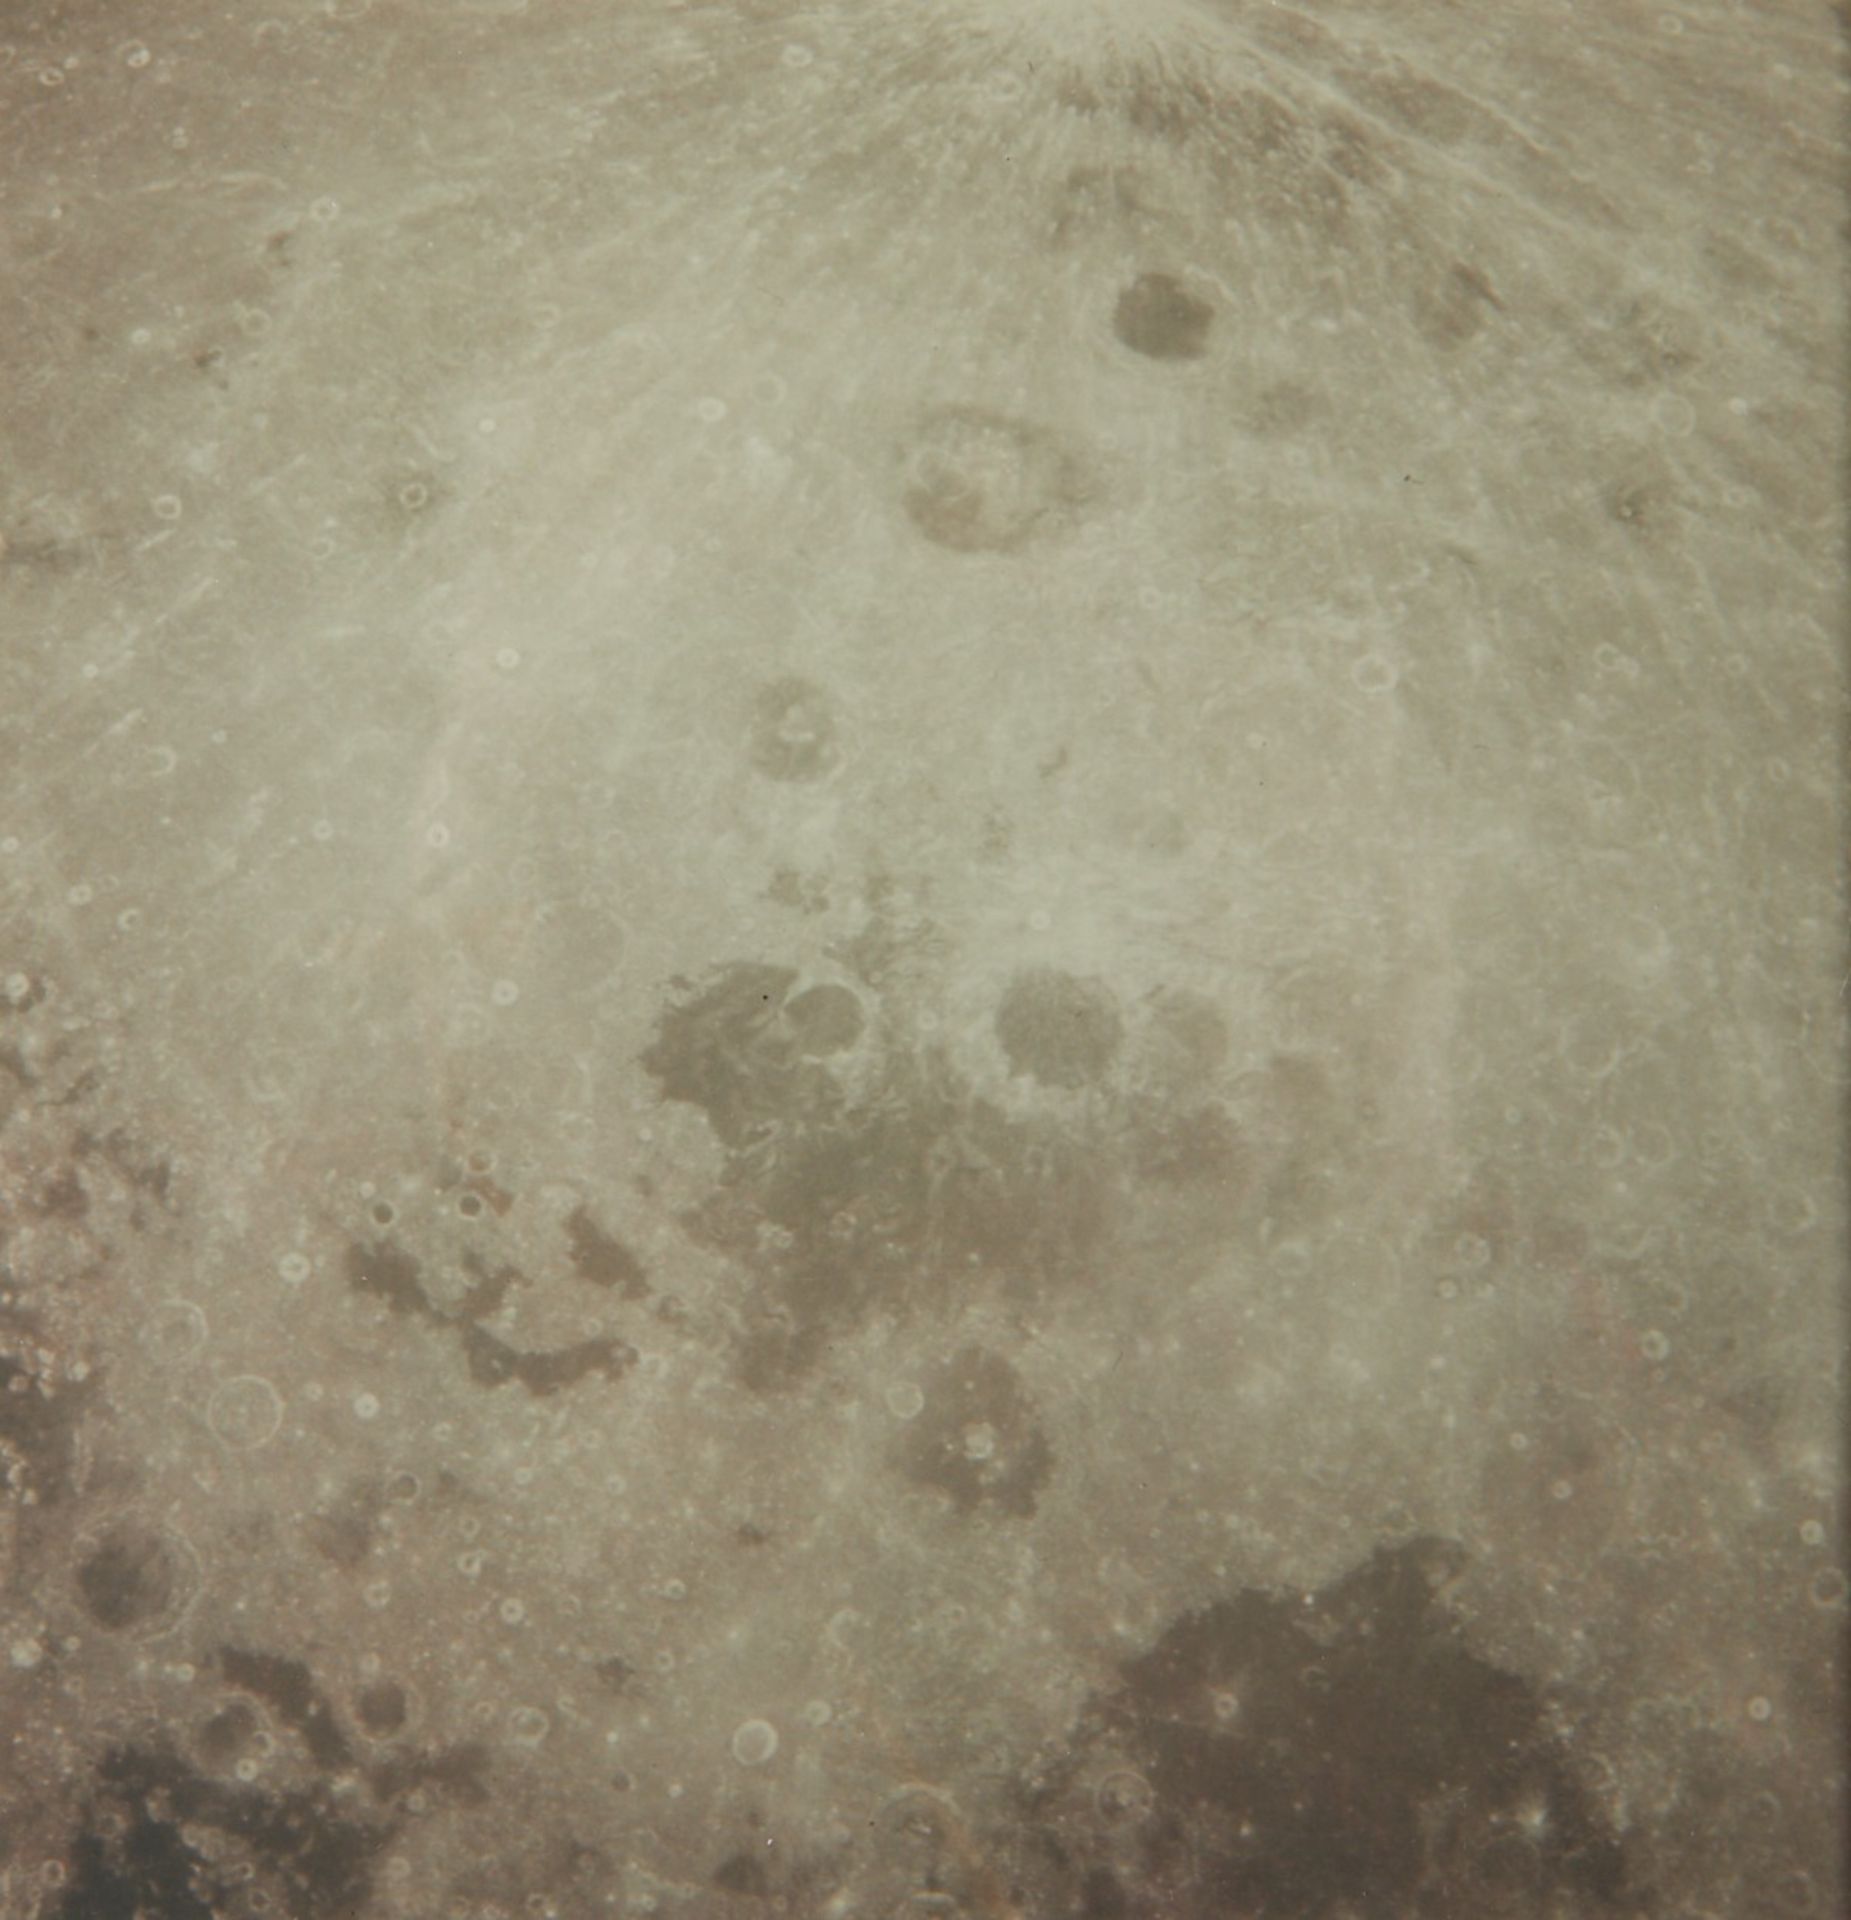 Group of 6 NASA Color Lunar Orbit A Kodak Paper Photos - Image 2 of 9